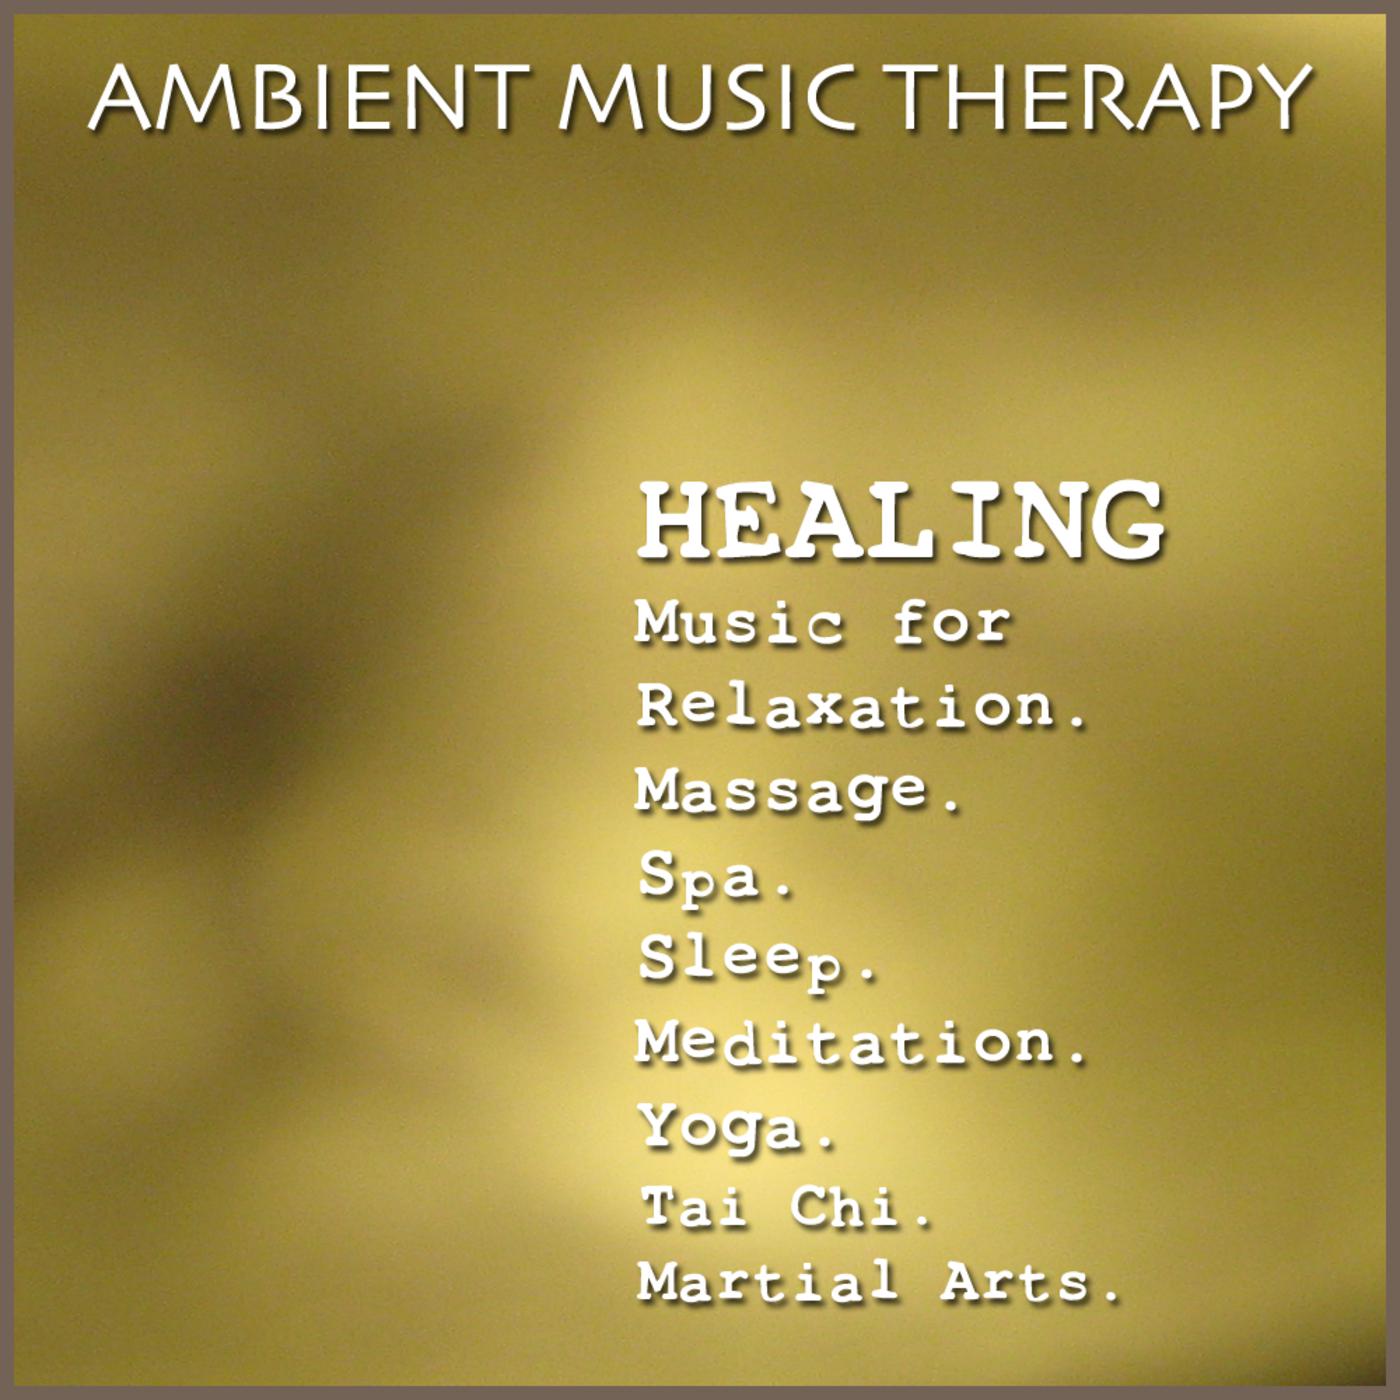 2. Healing Music for Relaxation. Massage. Spa. Sleep...